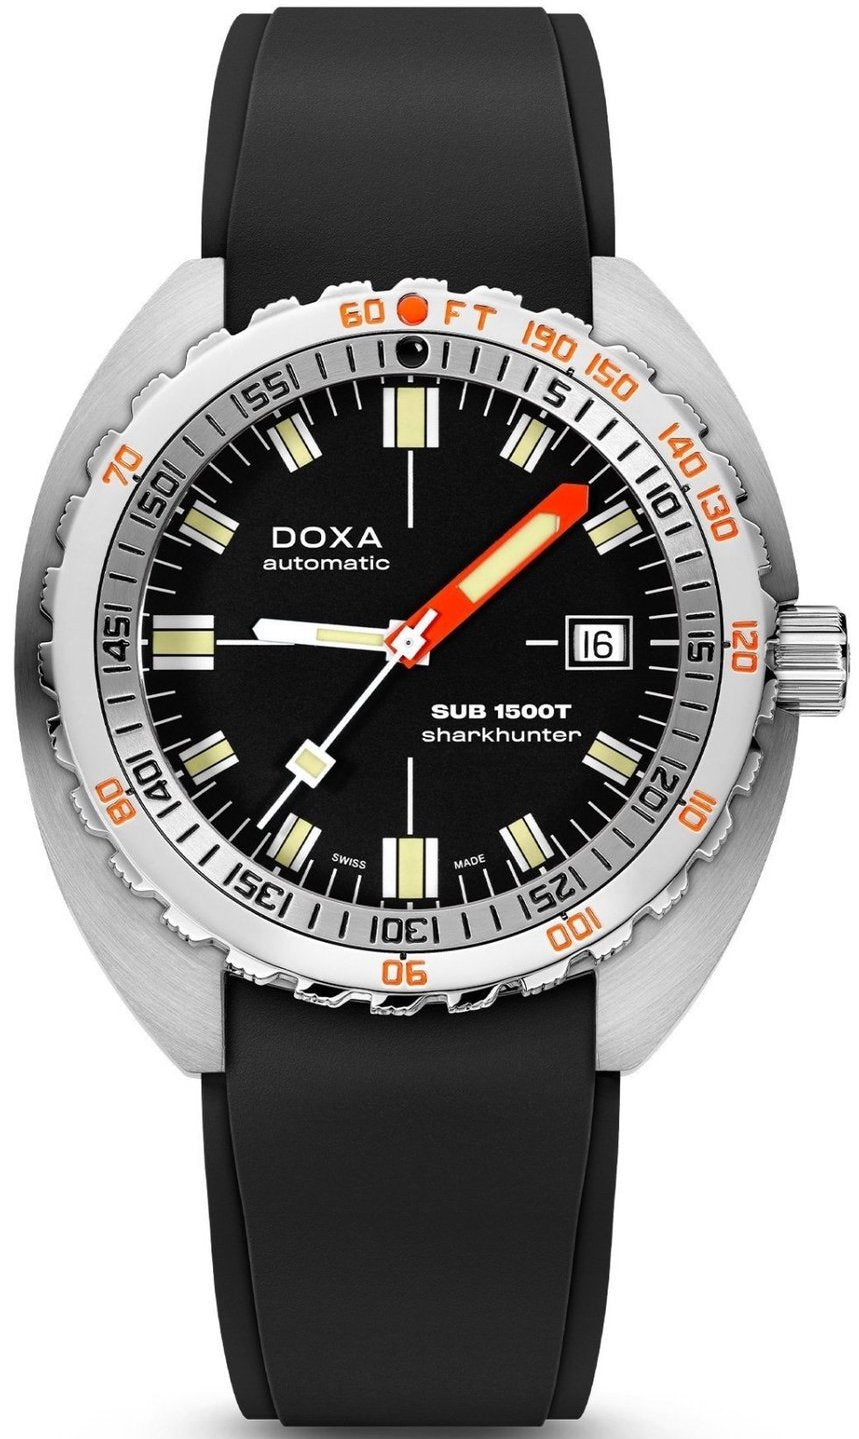 Photos - Wrist Watch DOXA Watch SUB 1500T Sharkhunter Rubber - Black DOX-051 